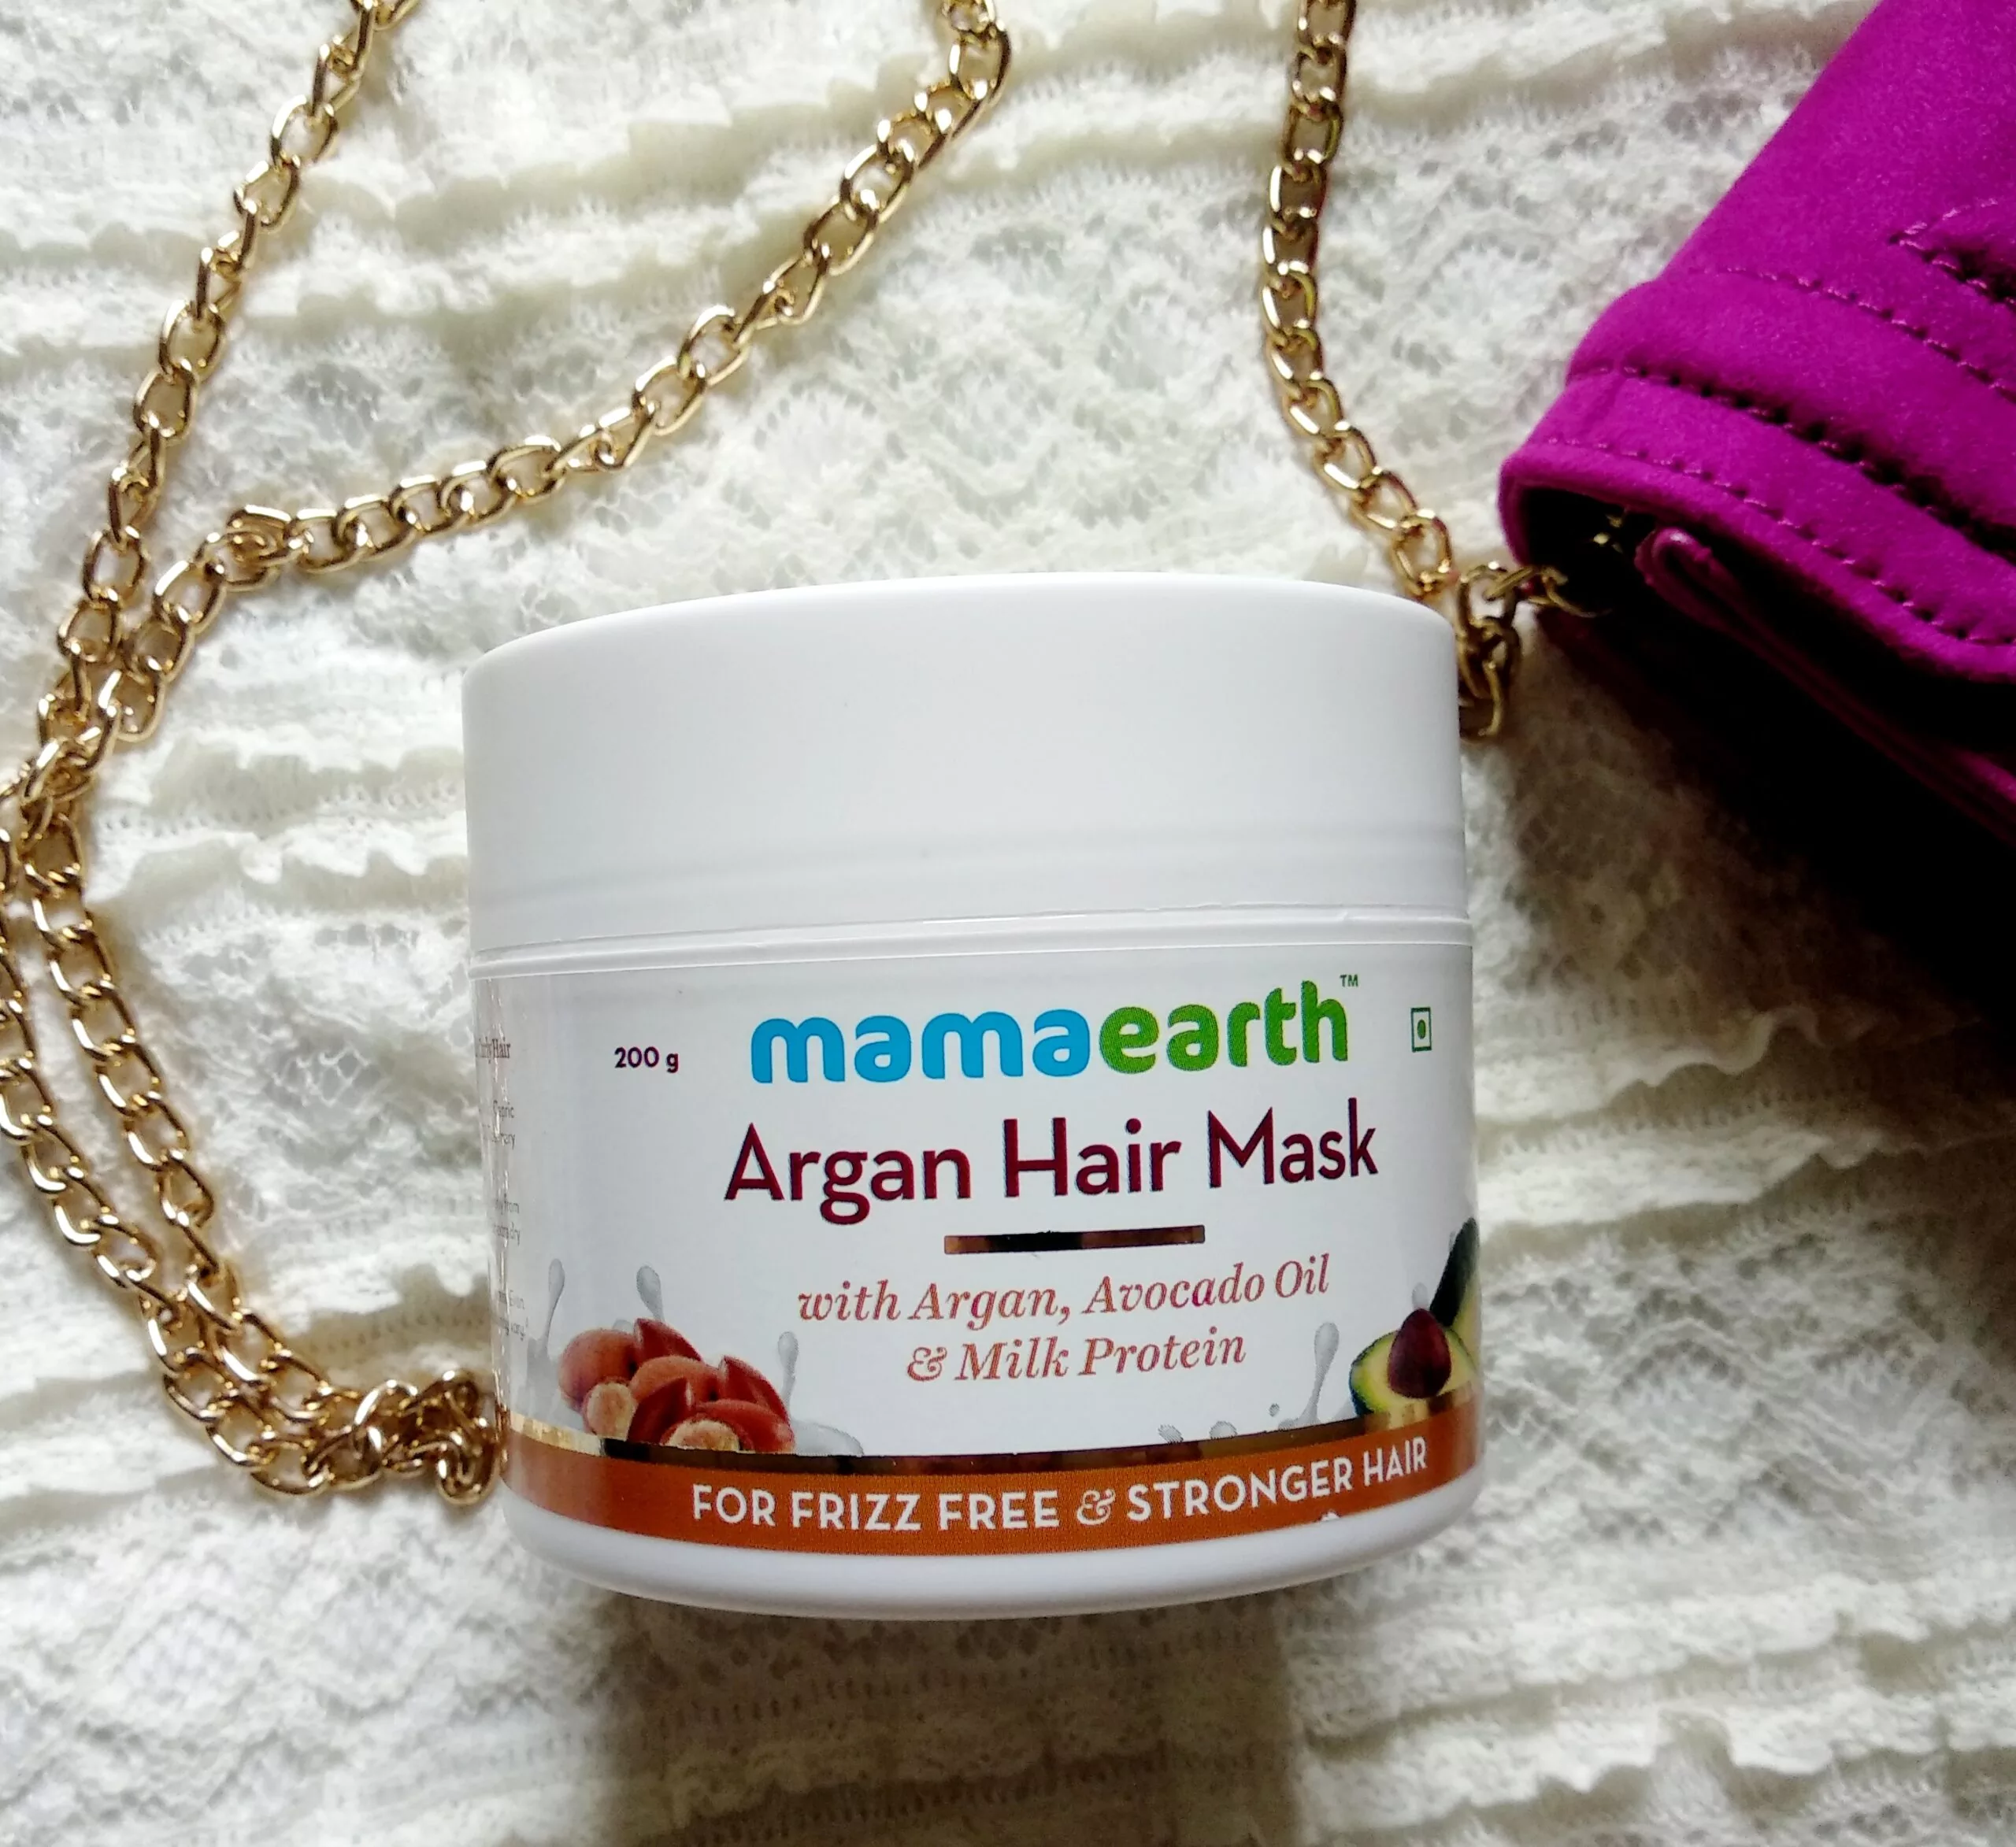 Mamaearth Argan hair mask review